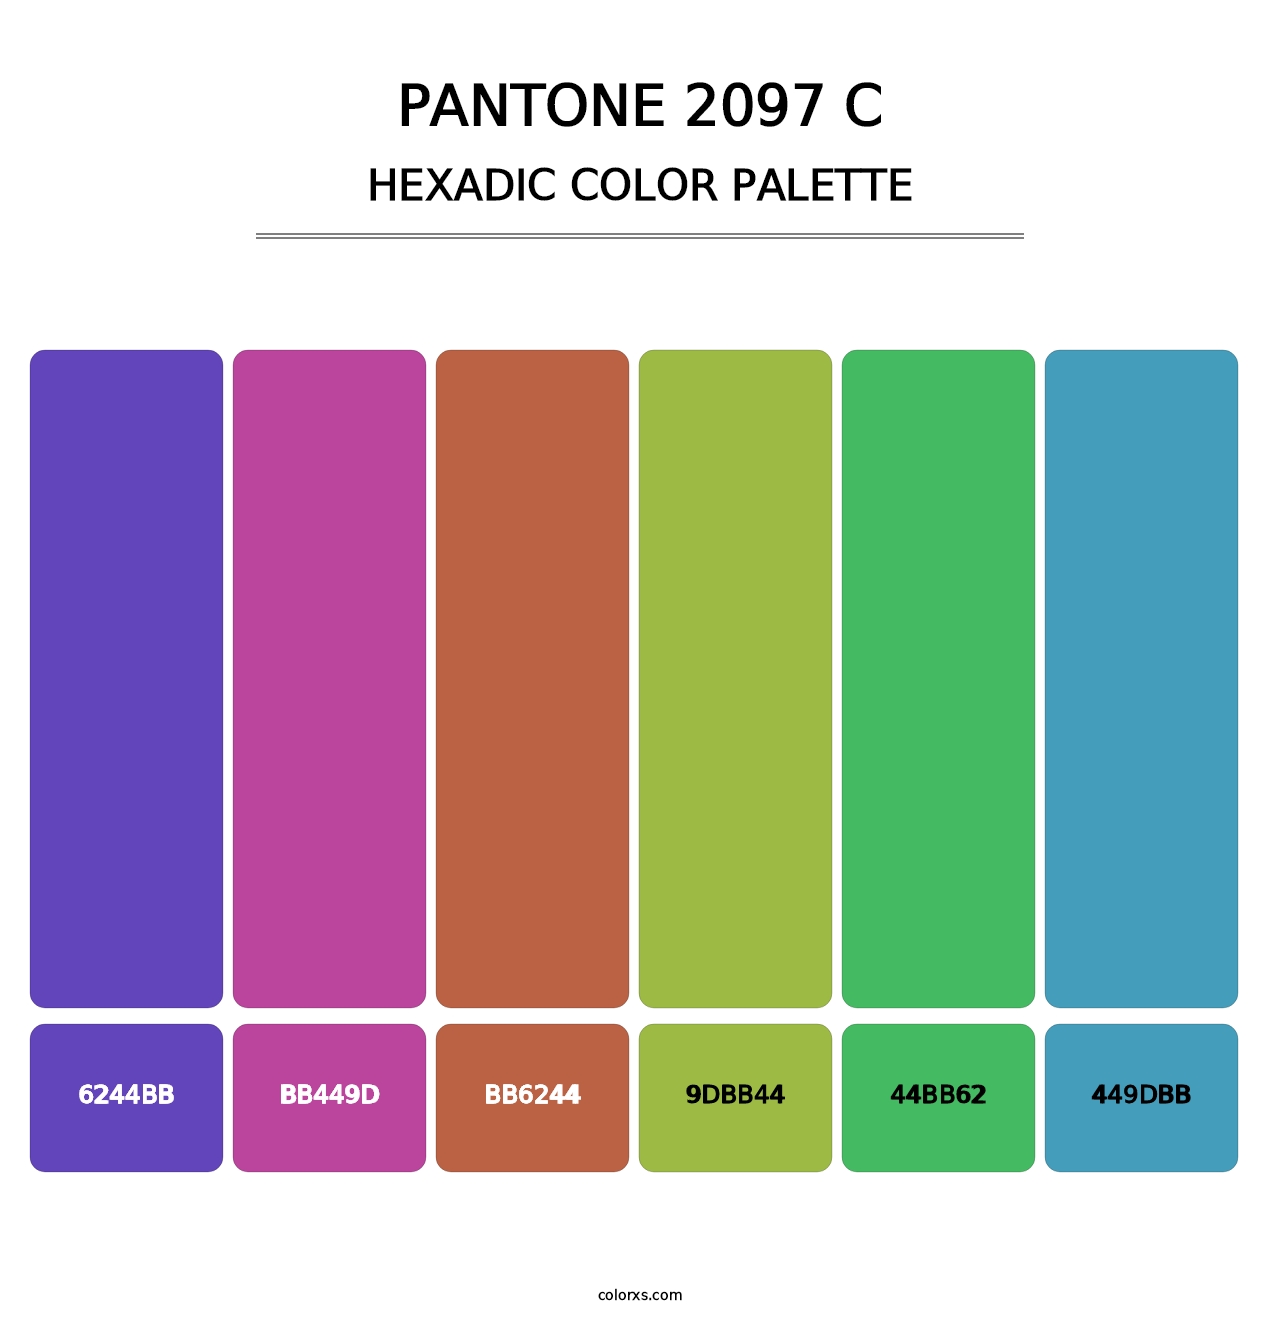 PANTONE 2097 C - Hexadic Color Palette